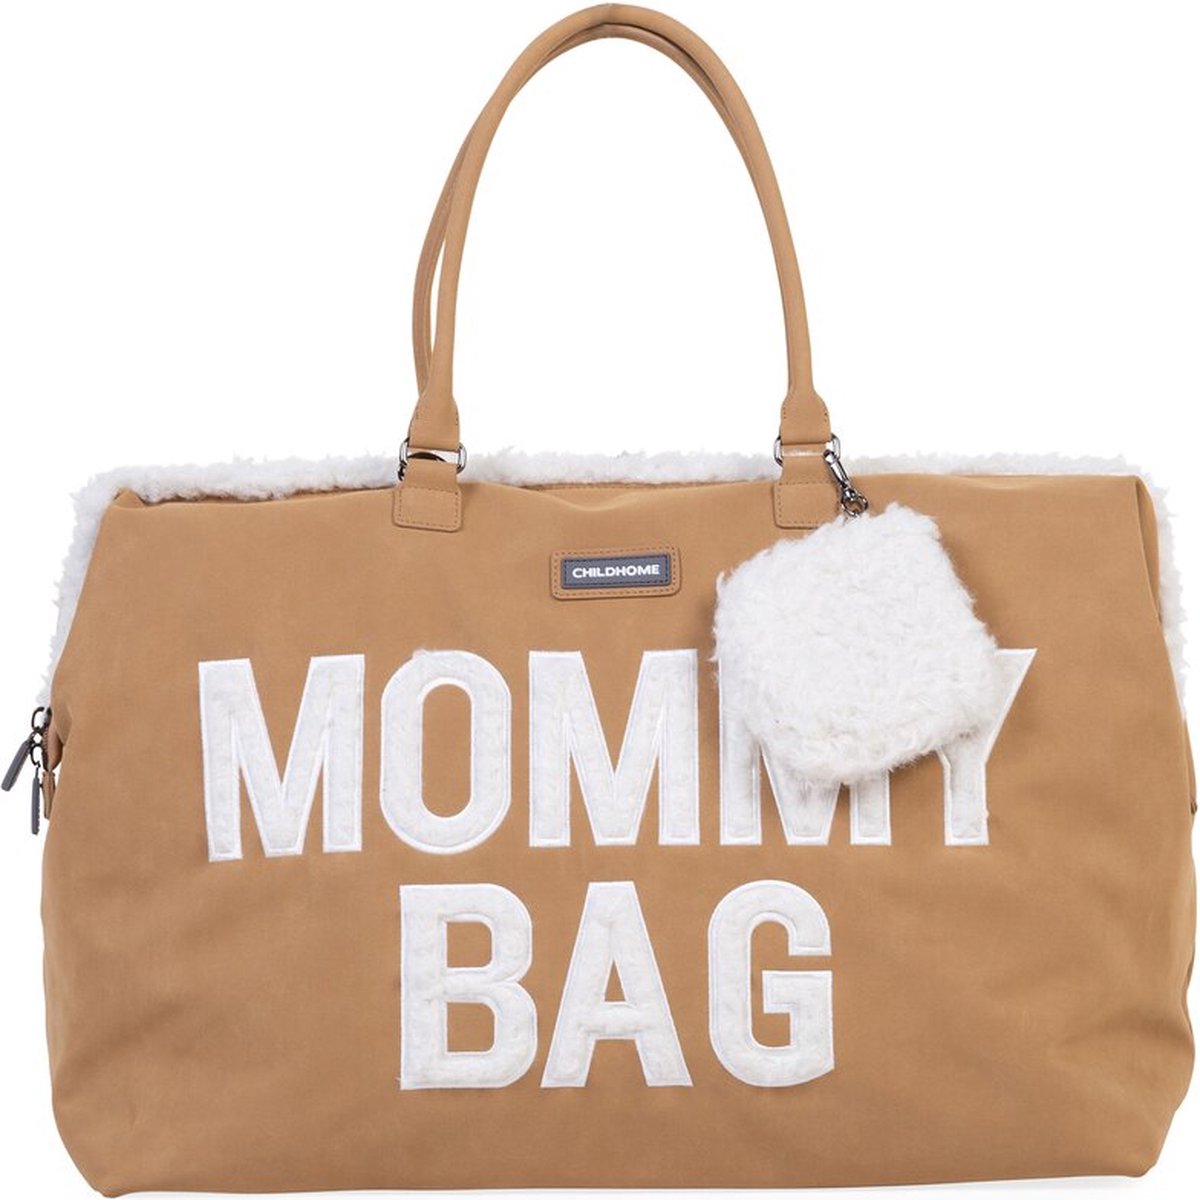 Childhome Mommy Bag ® - Verzorgingstas - Suede-look